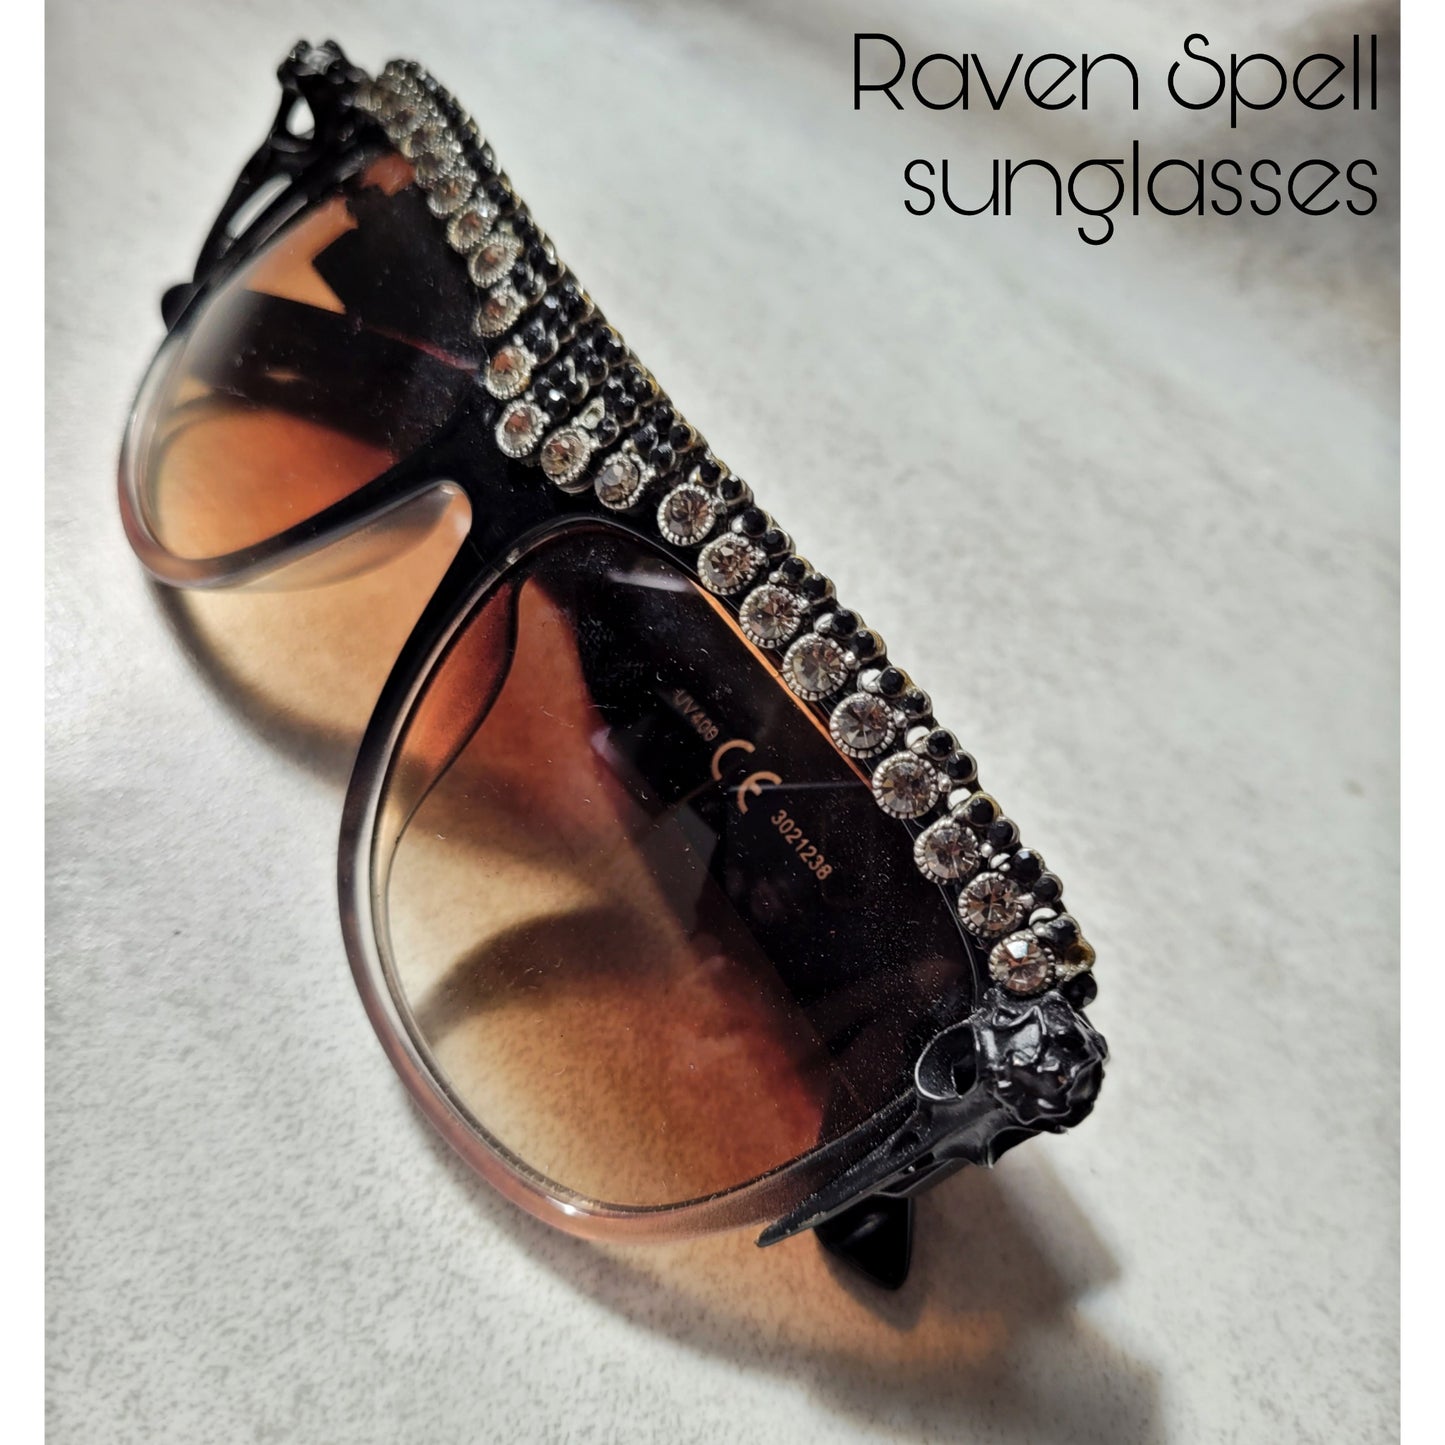 Midnight Garden Collection: The Raven Spell Sunglasses